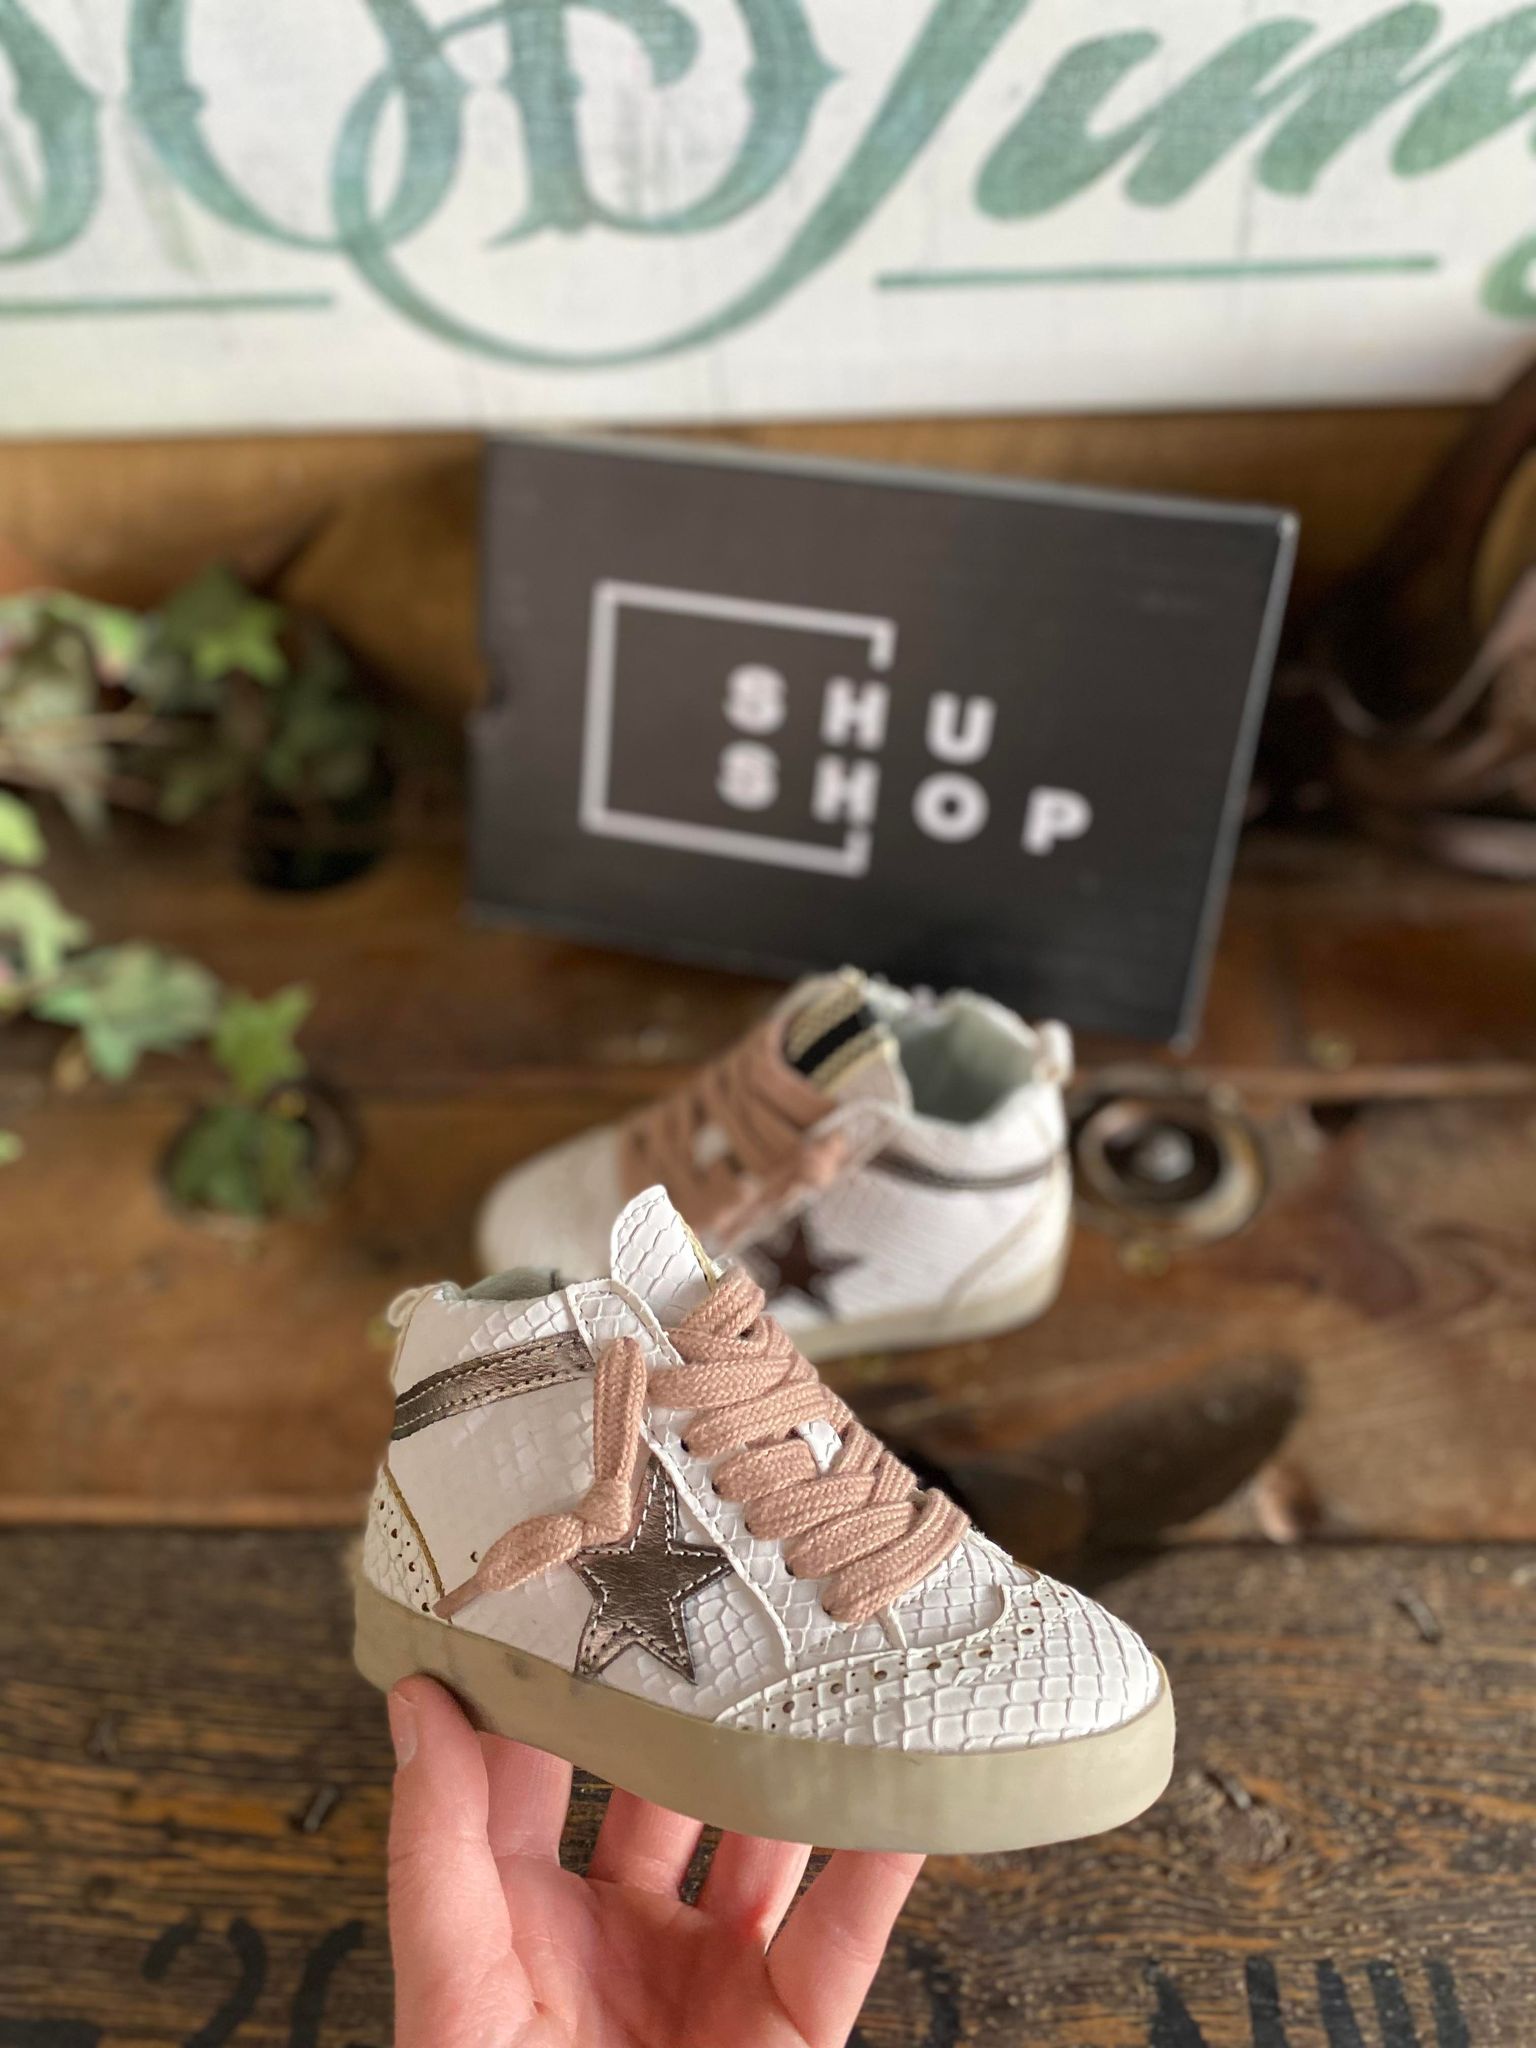 Paulina Toddler Sneaker in Bone Snake by Shu Shop-Kids Casual Shoes-Shu Shop-Lucky J Boots & More, Women's, Men's, & Kids Western Store Located in Carthage, MO